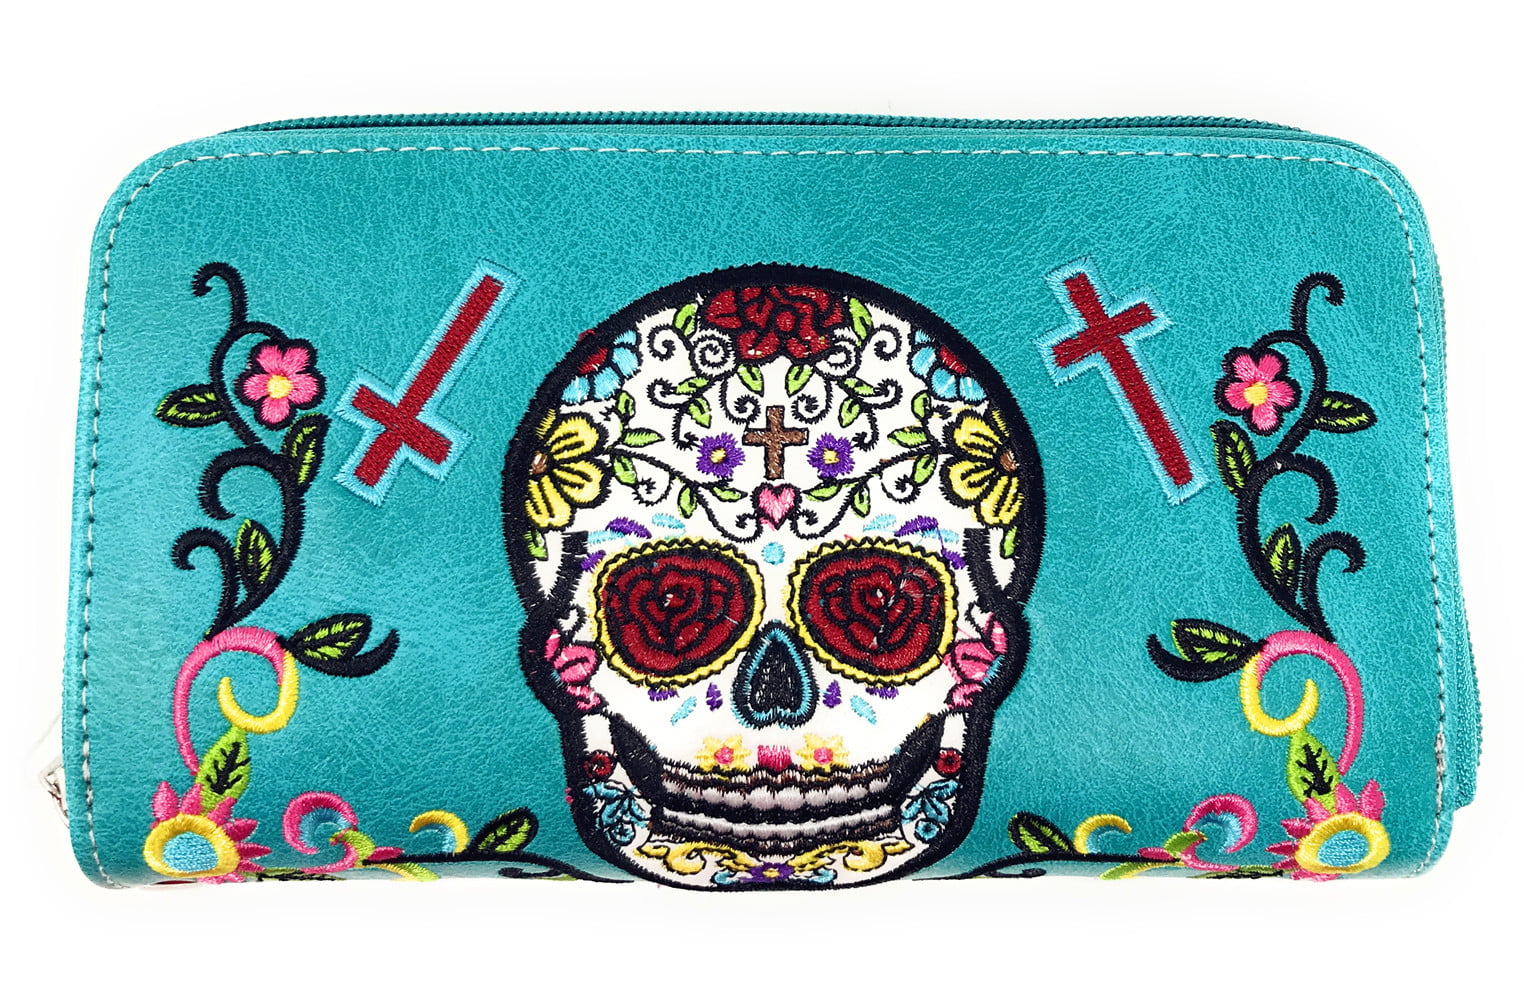 USA Sugar Skull Zipper Canvas Coin Purse Wallet Make Up Bag,Cellphone Bag With Handle